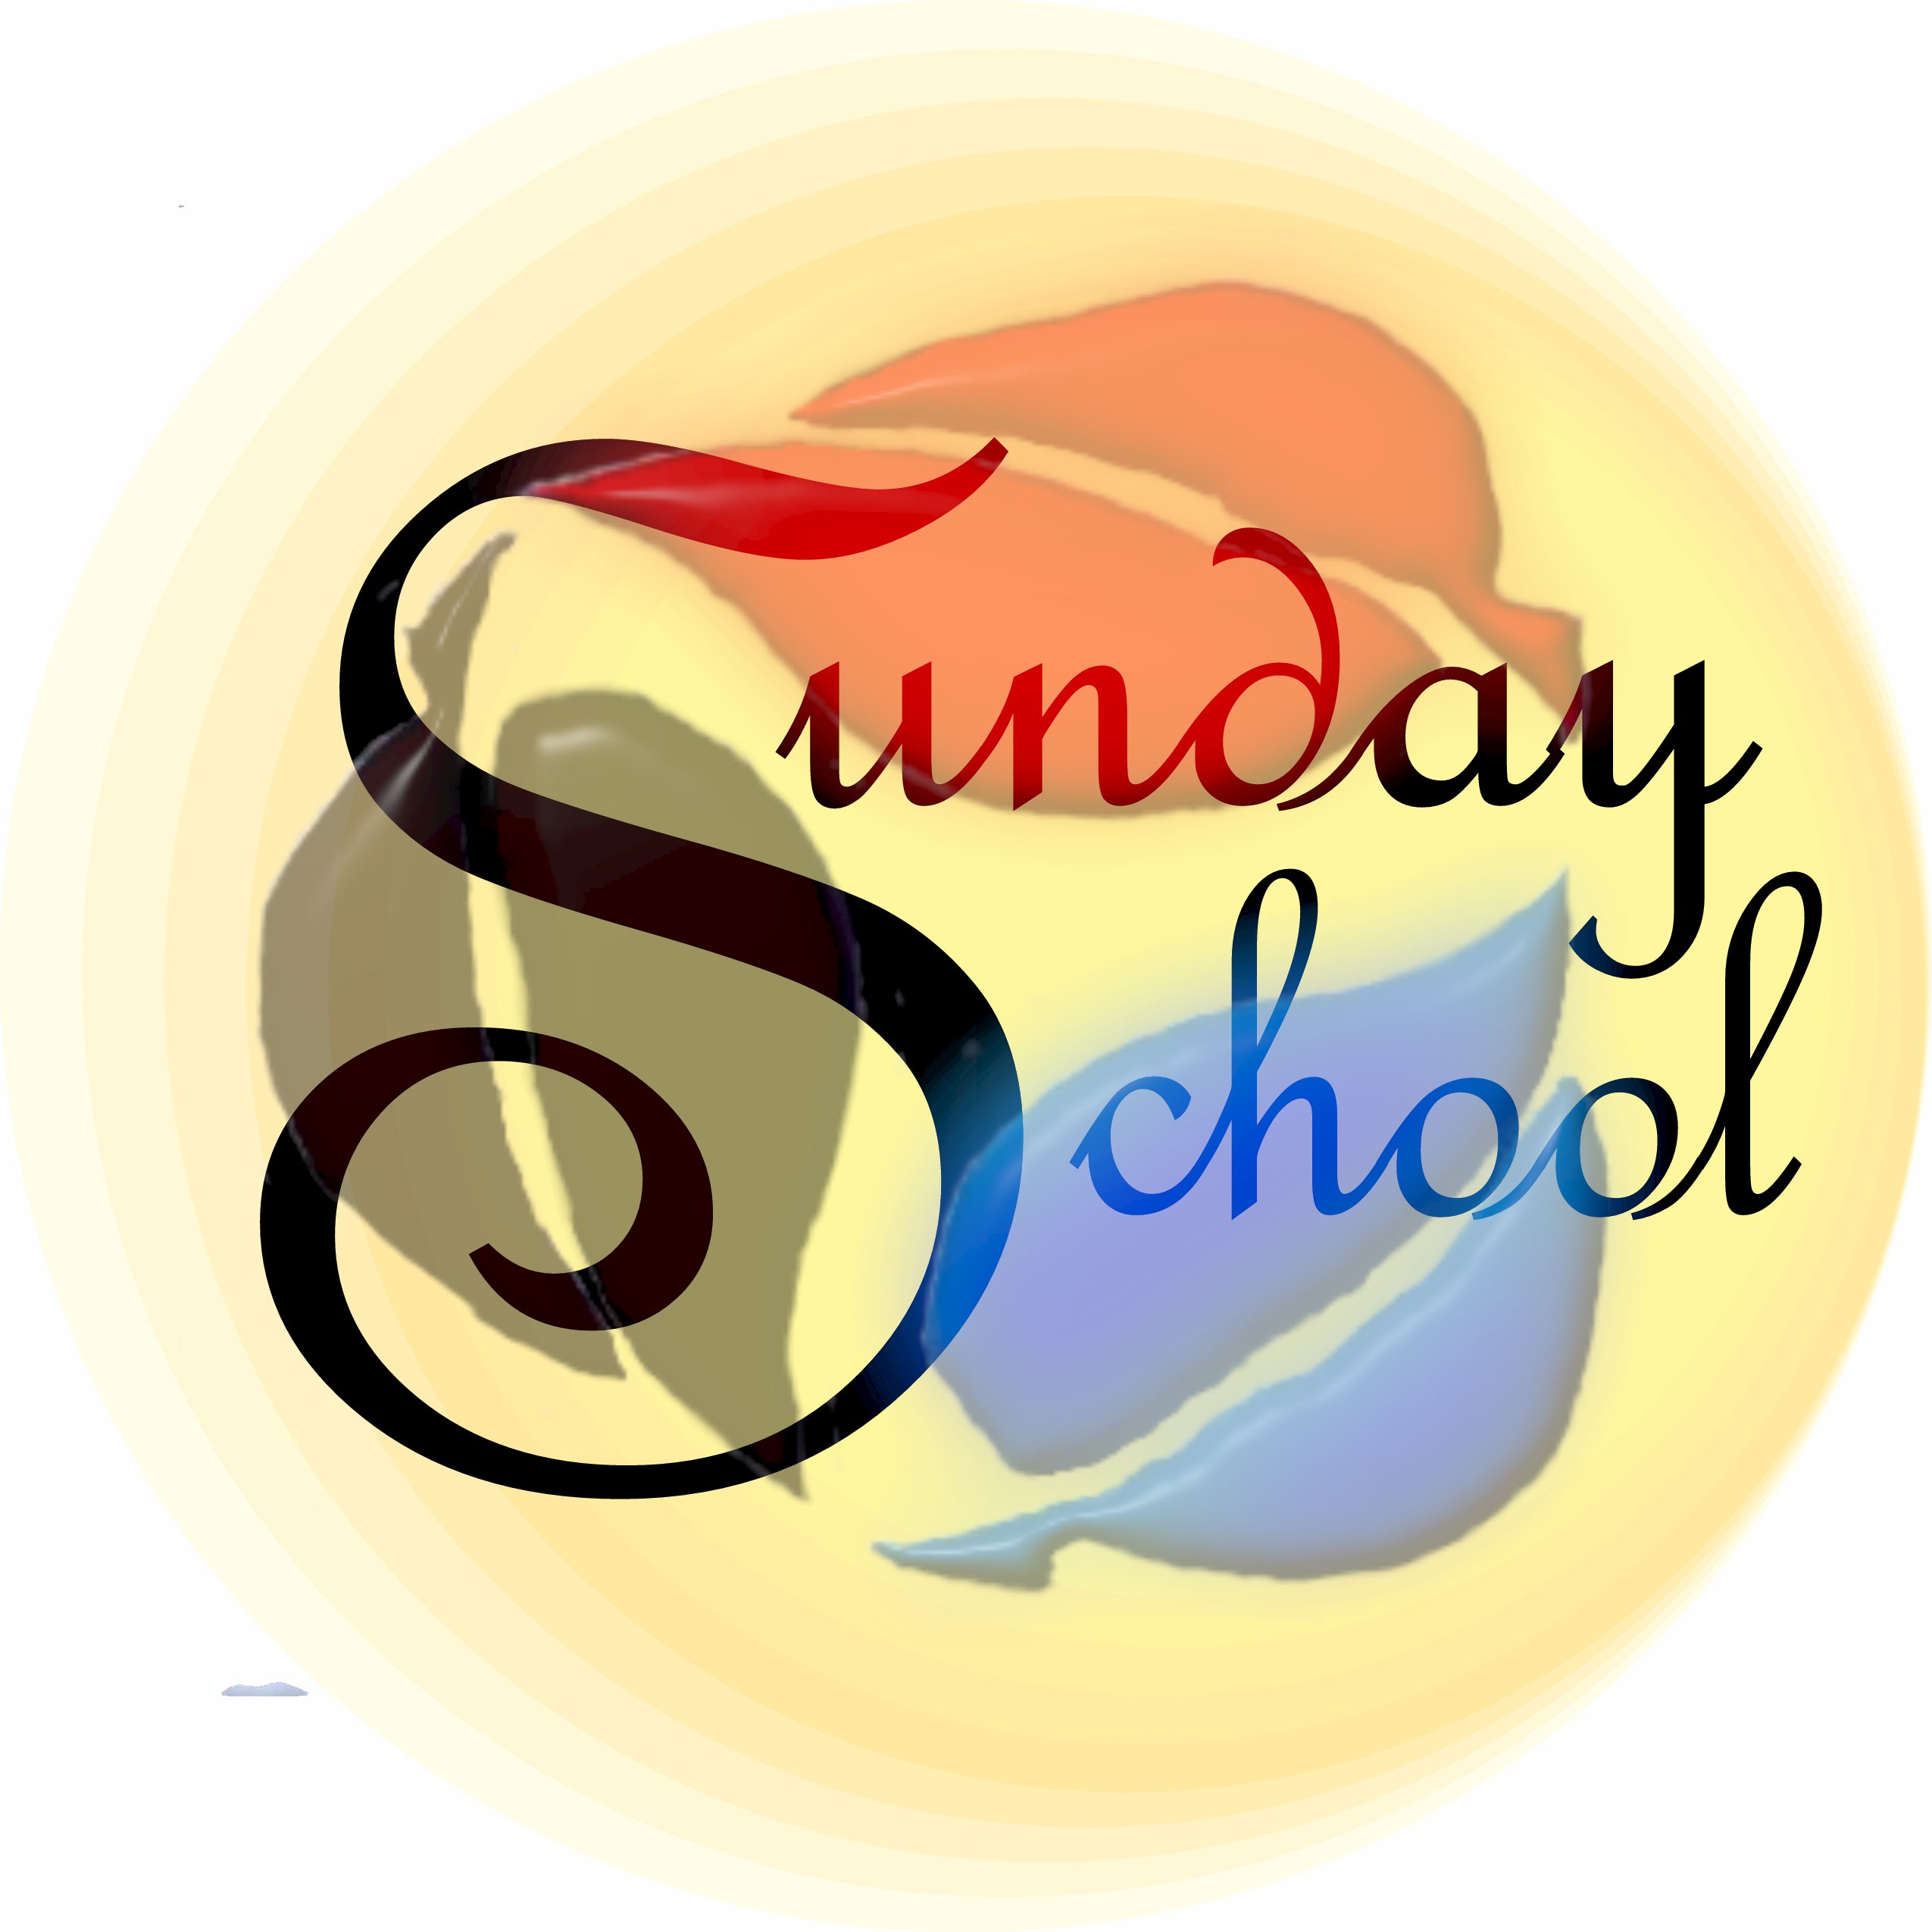 Sunday School - Brian McDonnell(RCF)